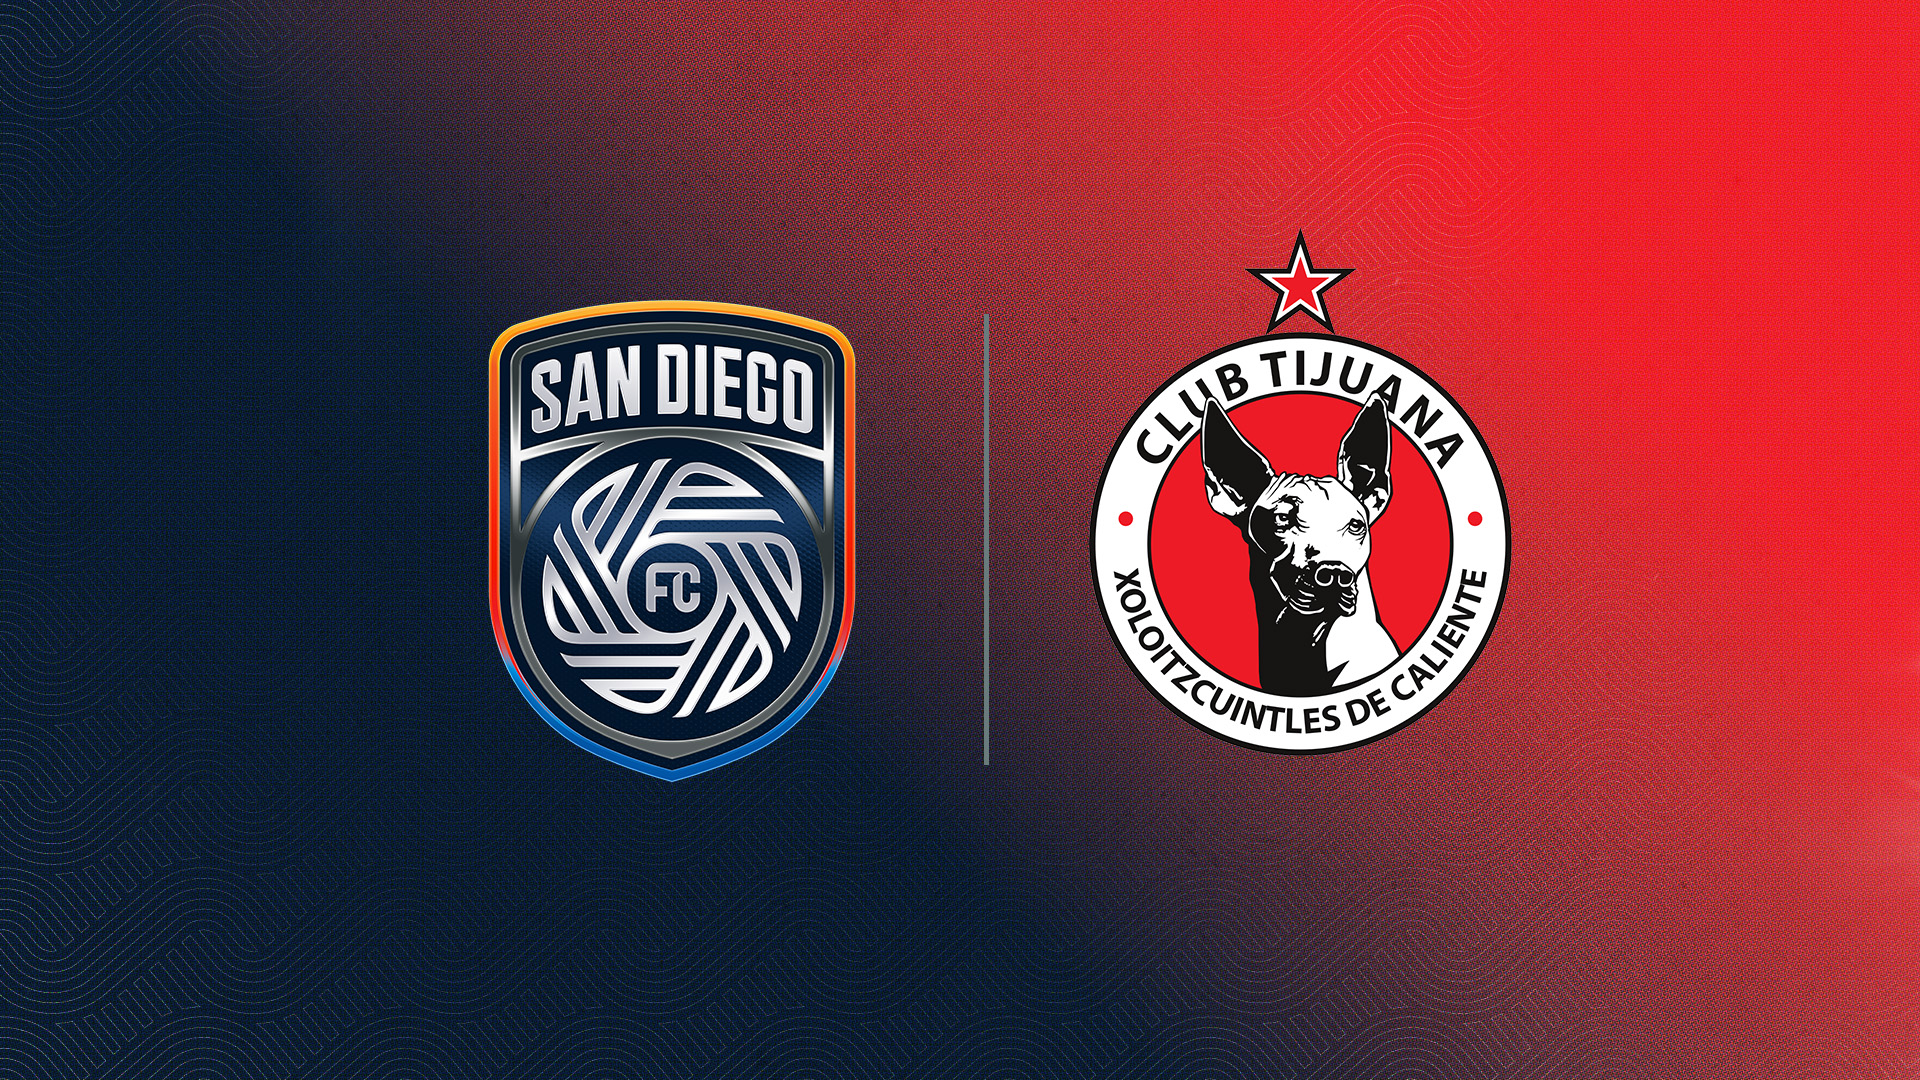 San Diego FC & Club Tijuana Announce a Five-Year Partnership